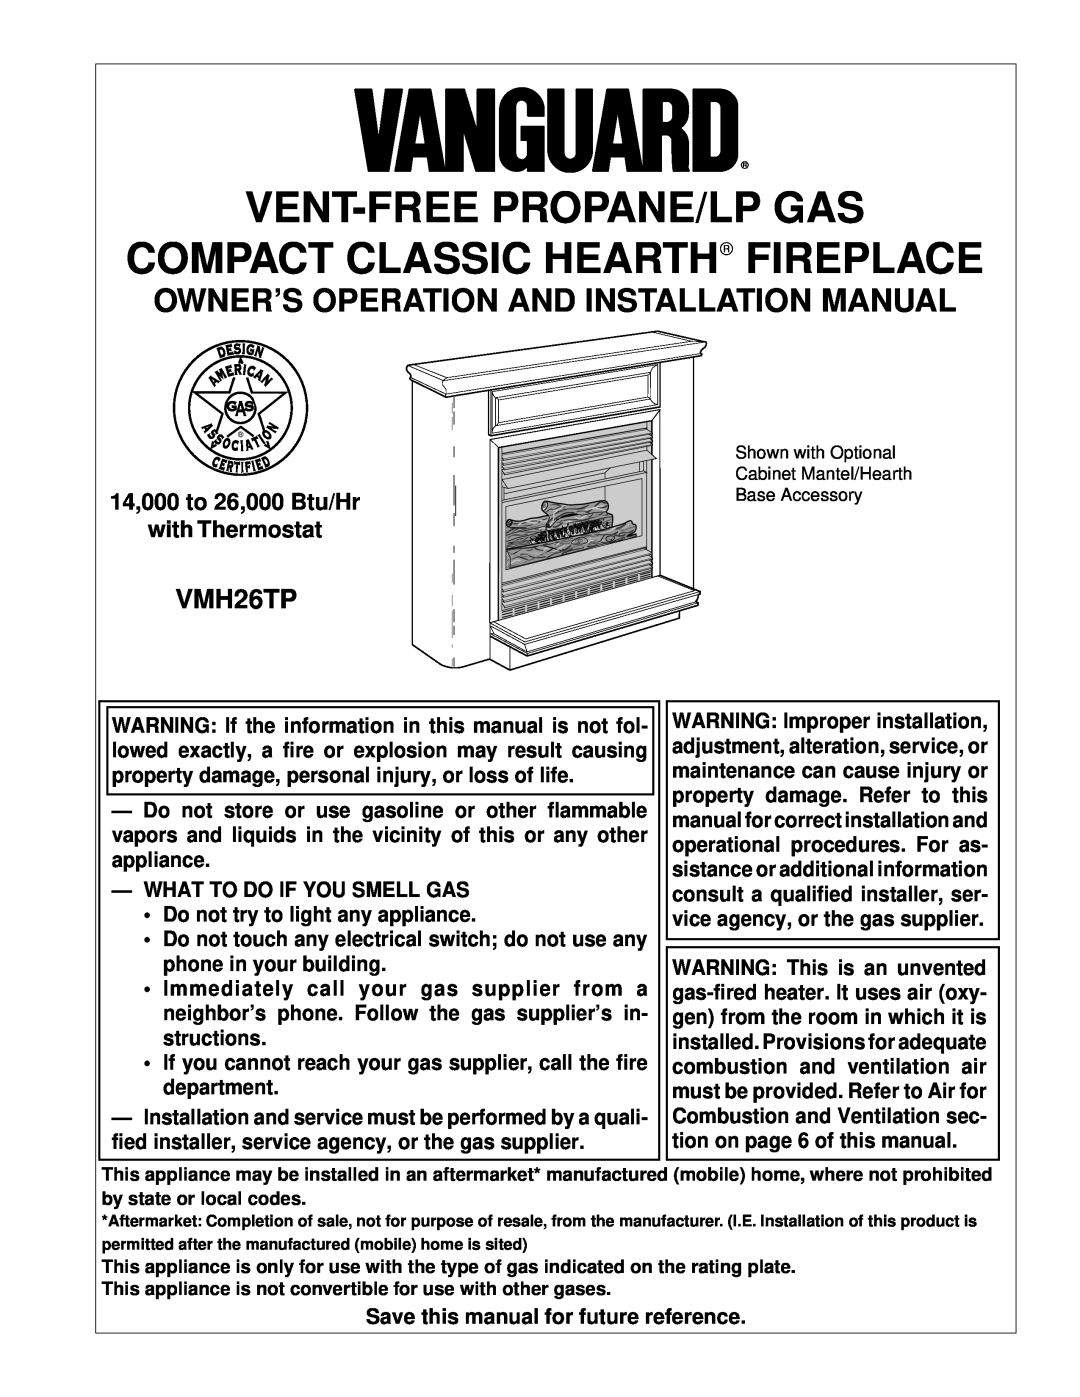 Vanguard Heating VMH26TPB installation manual Owner’S Operation And Installation Manual, Vent-Freepropane/Lp Gas 